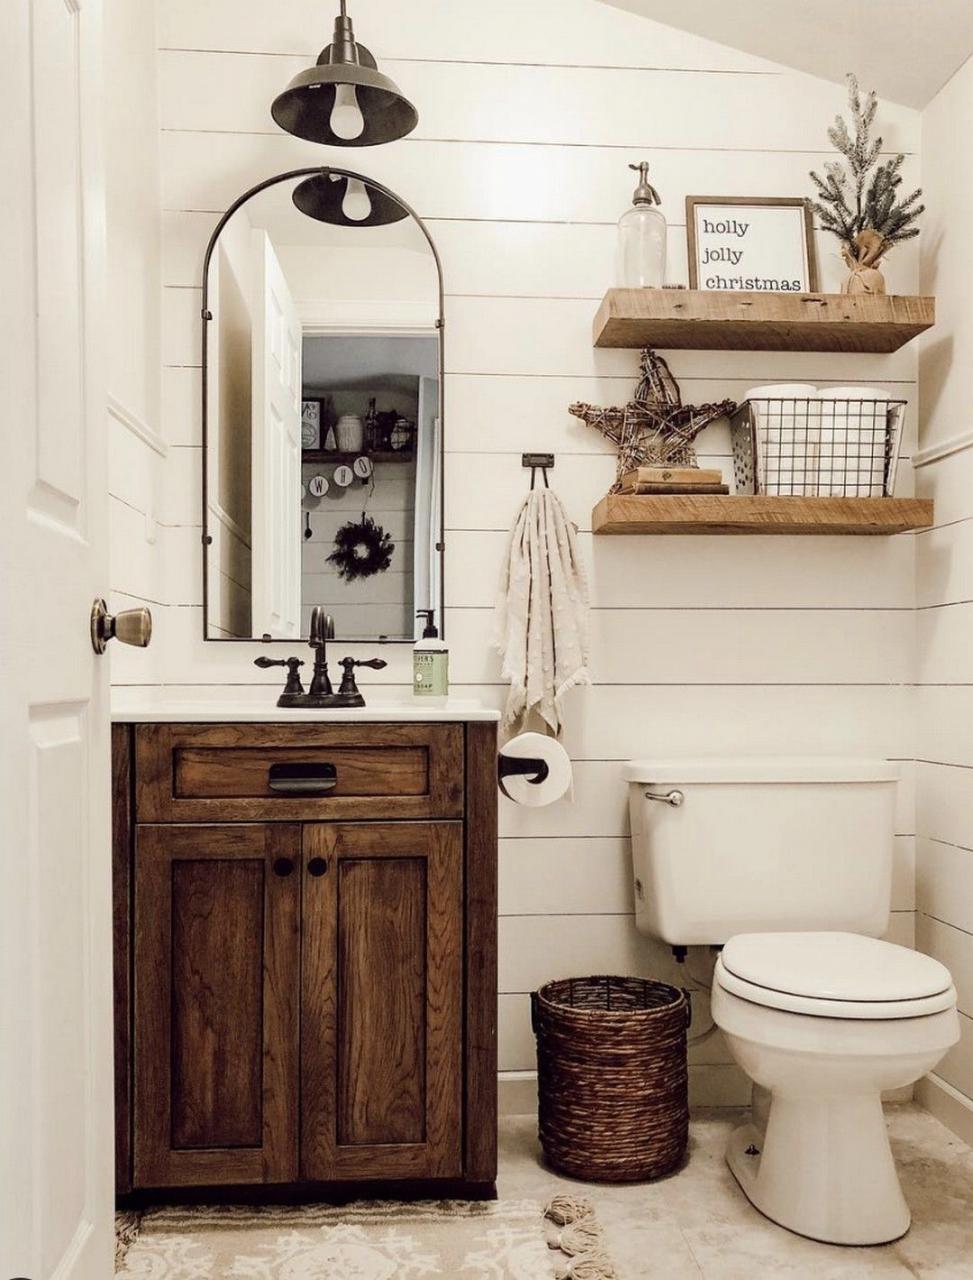 91 Relax Rustic Farmhouse Bathroom Design Ideas in 2020 Rustic